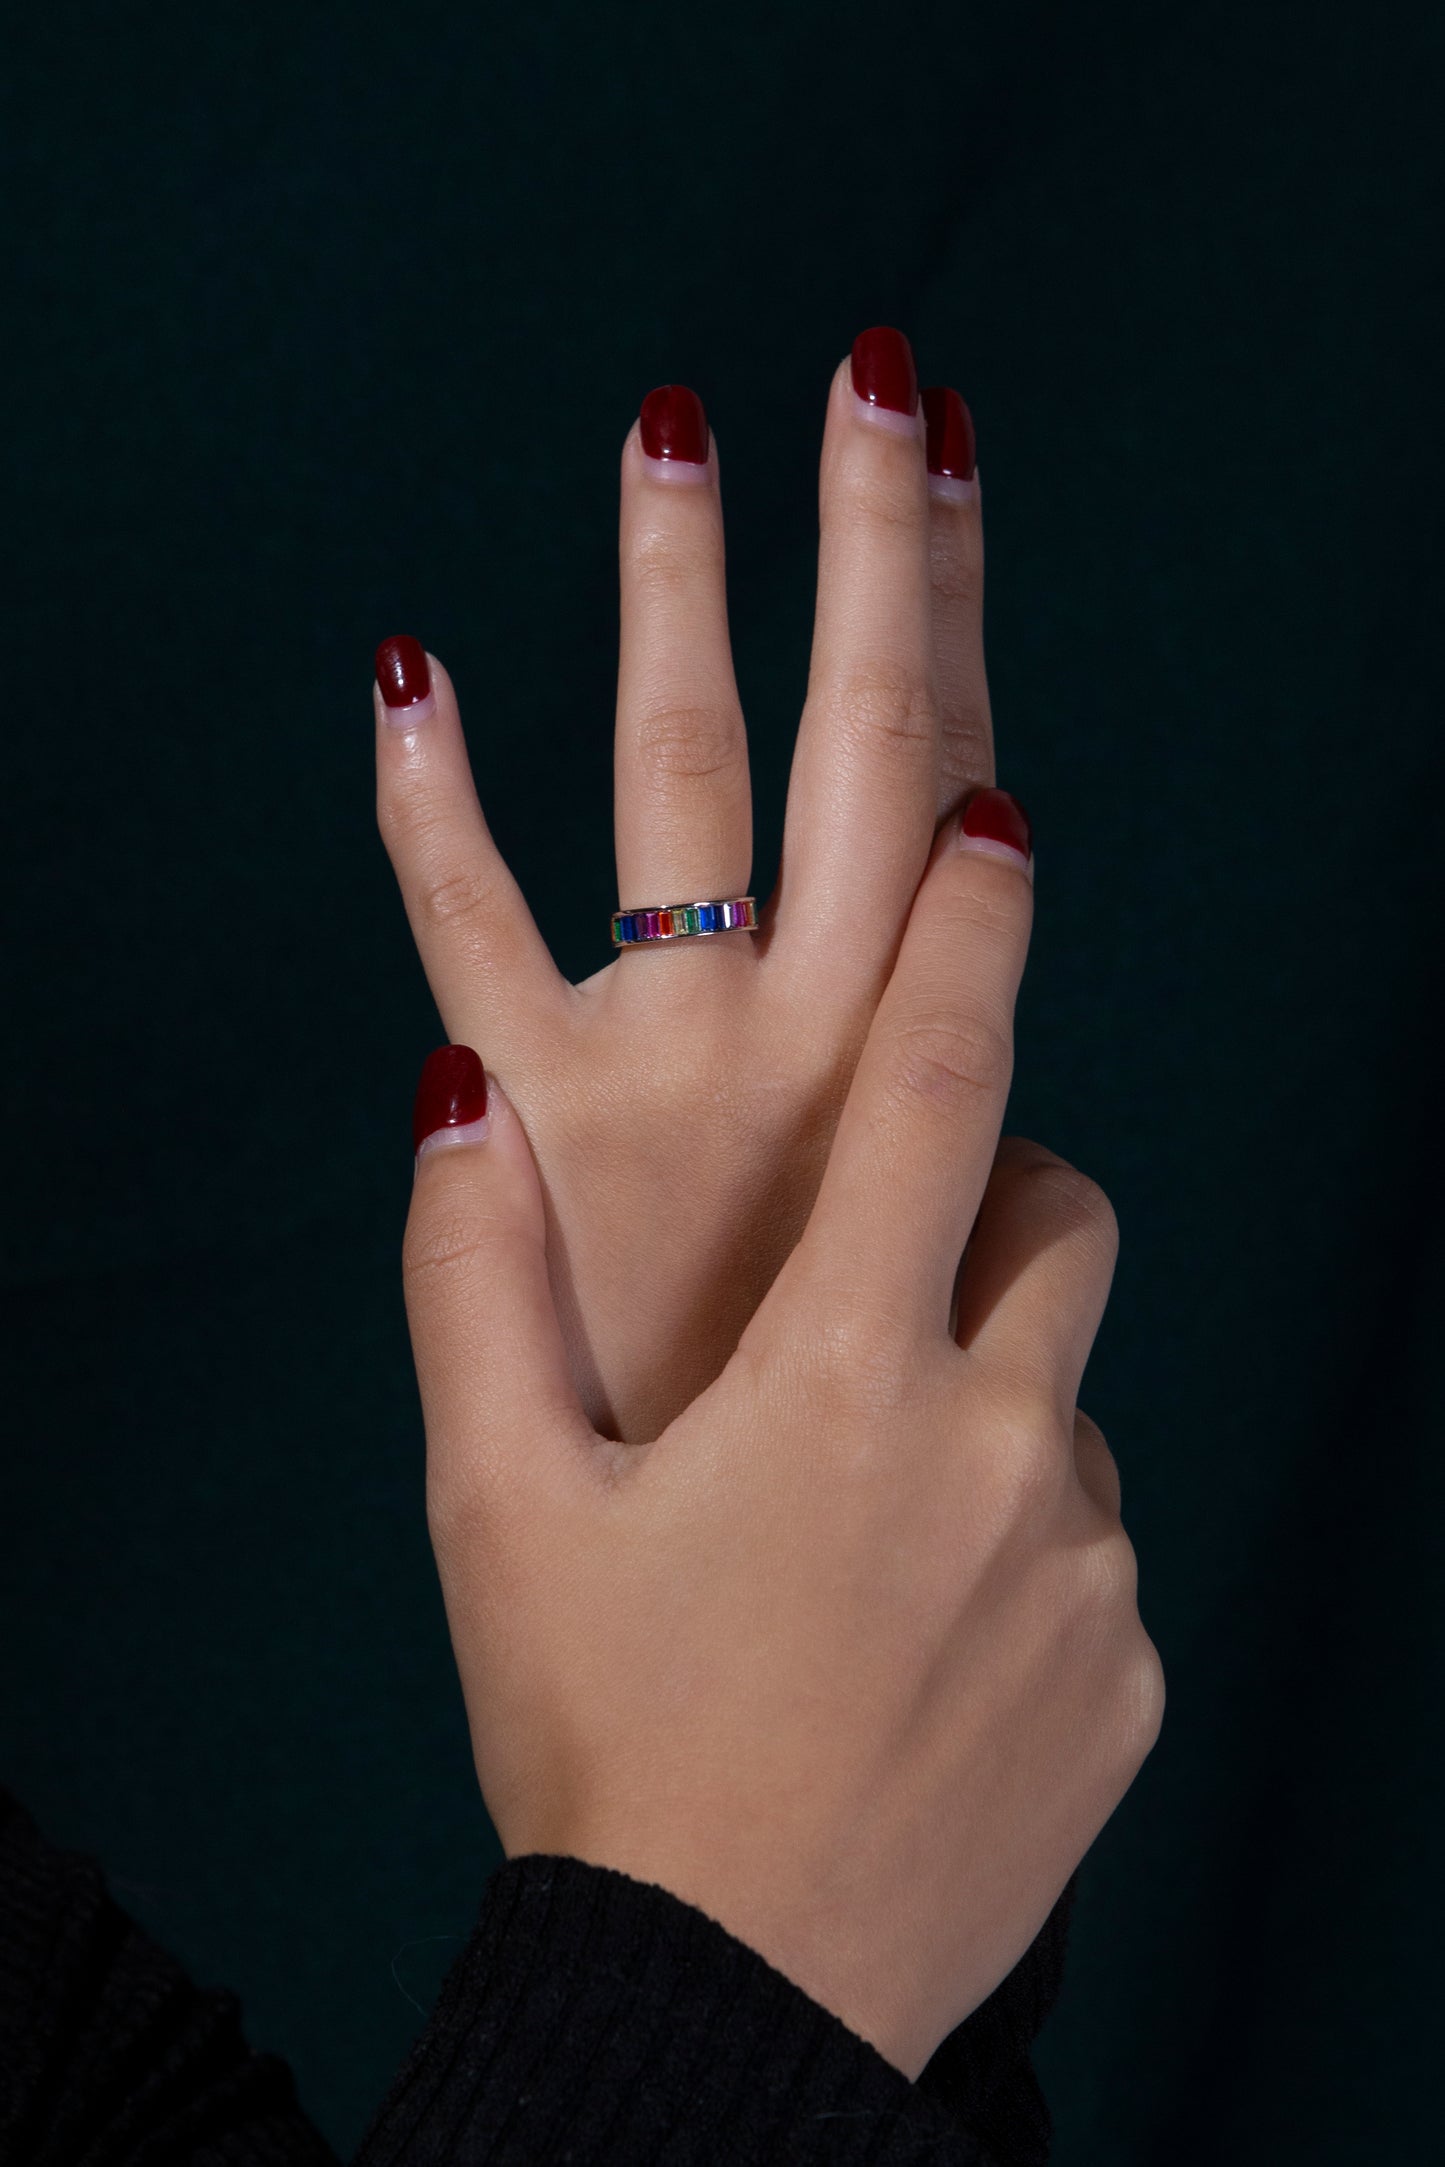 THIALH - Rainbow - Cubic Zirconia Ring